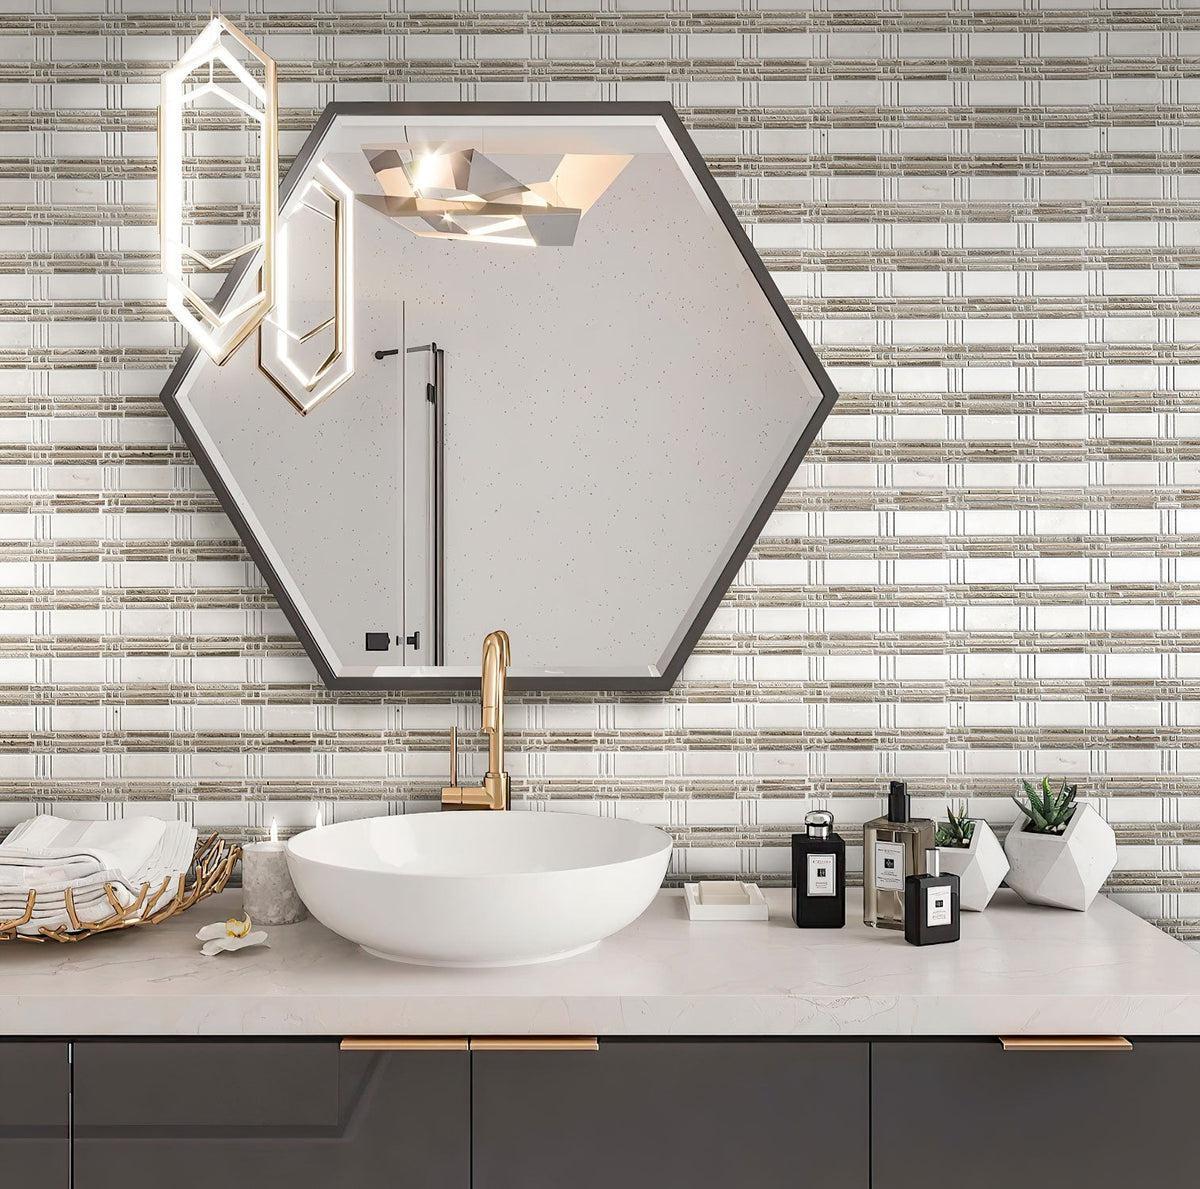 Geometric style bathroom with white wooden beige tile backsplash